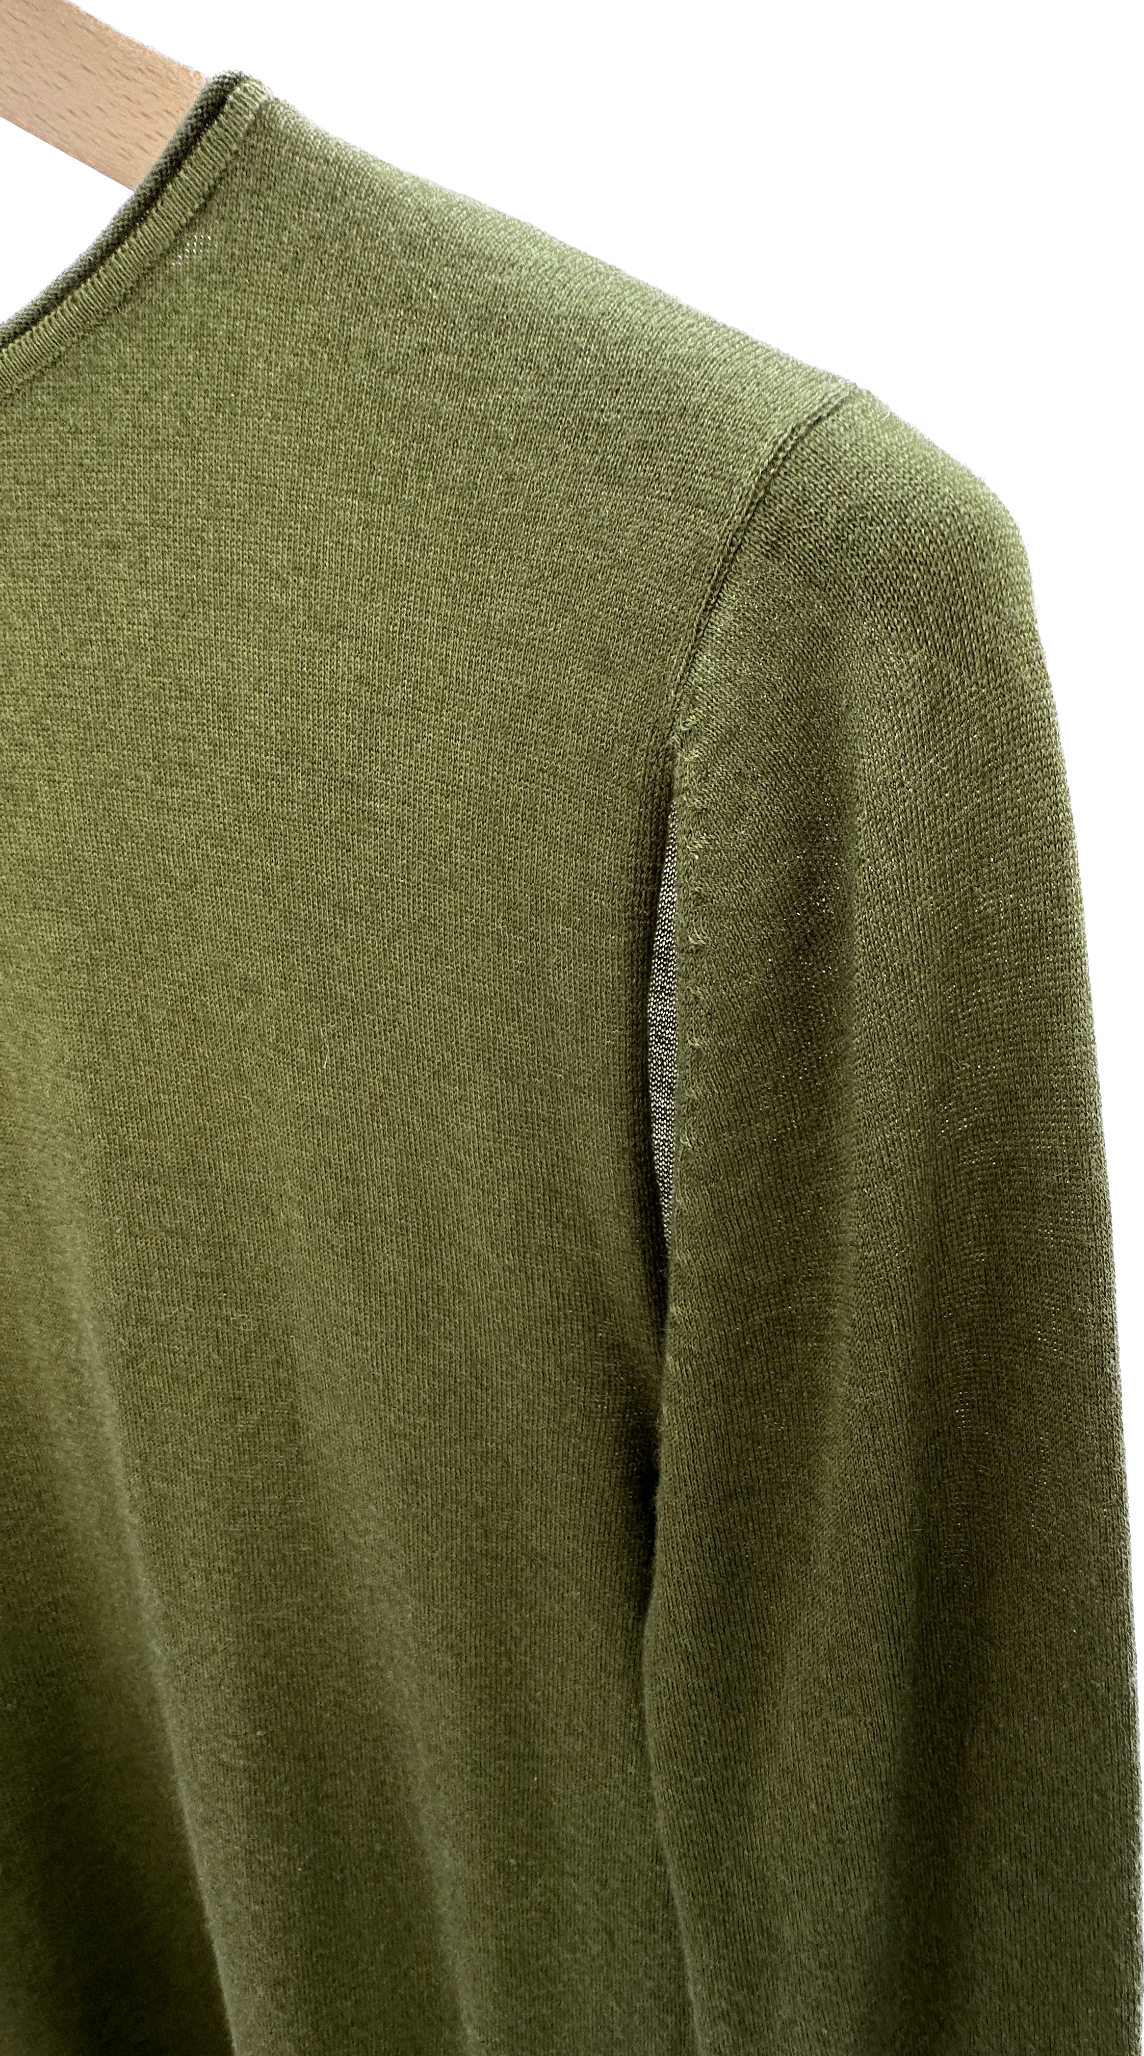 richileu khaki knit top with shoulder splits close up